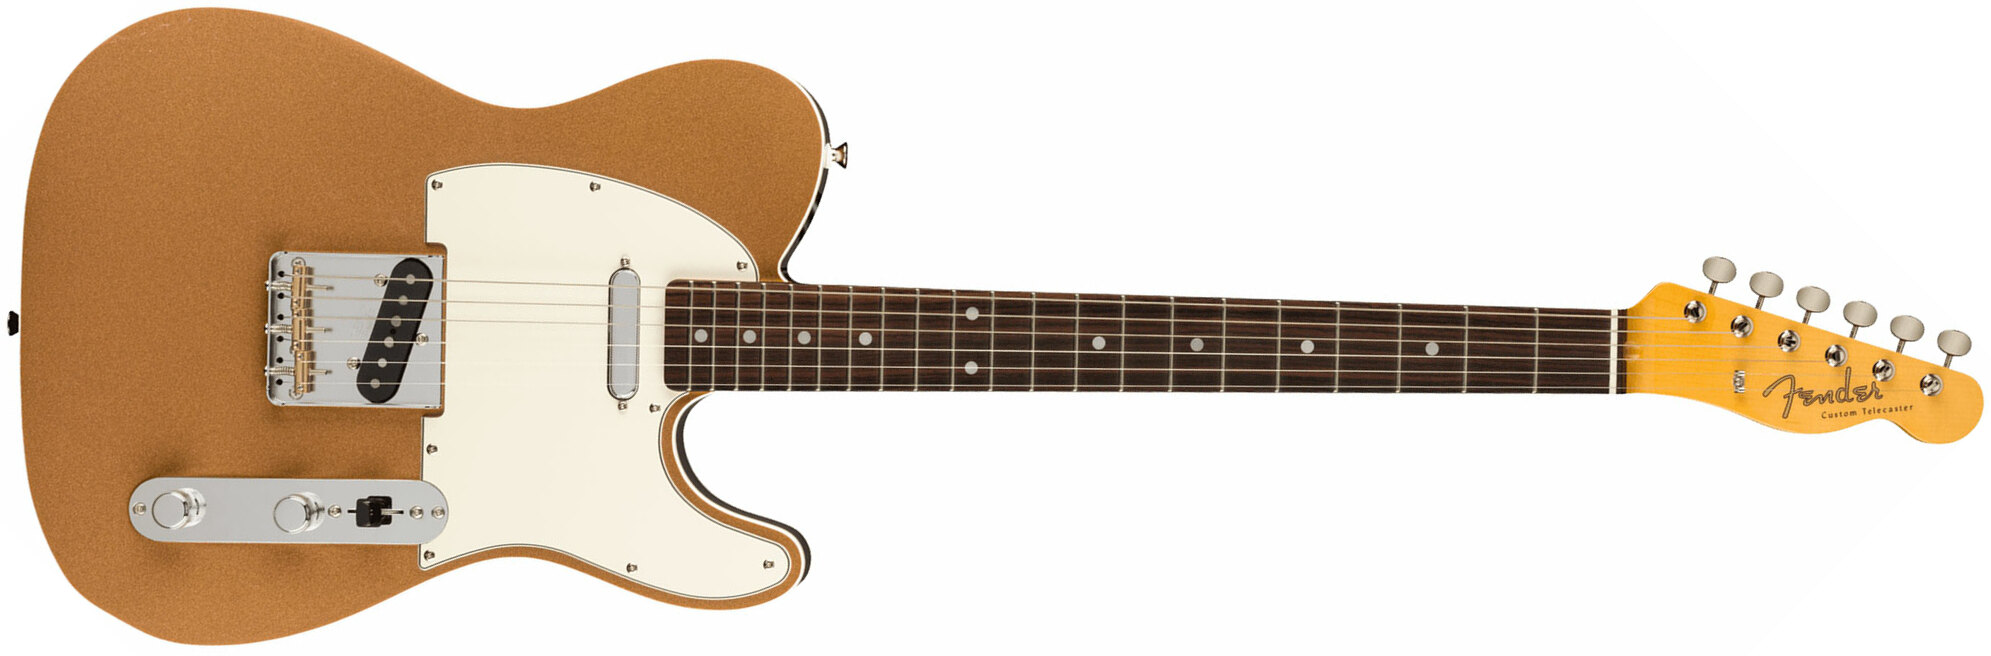 Fender Tele Custom '60s Jv Modified Jap 2s Ht Rw - Firemist Gold - Televorm elektrische gitaar - Main picture